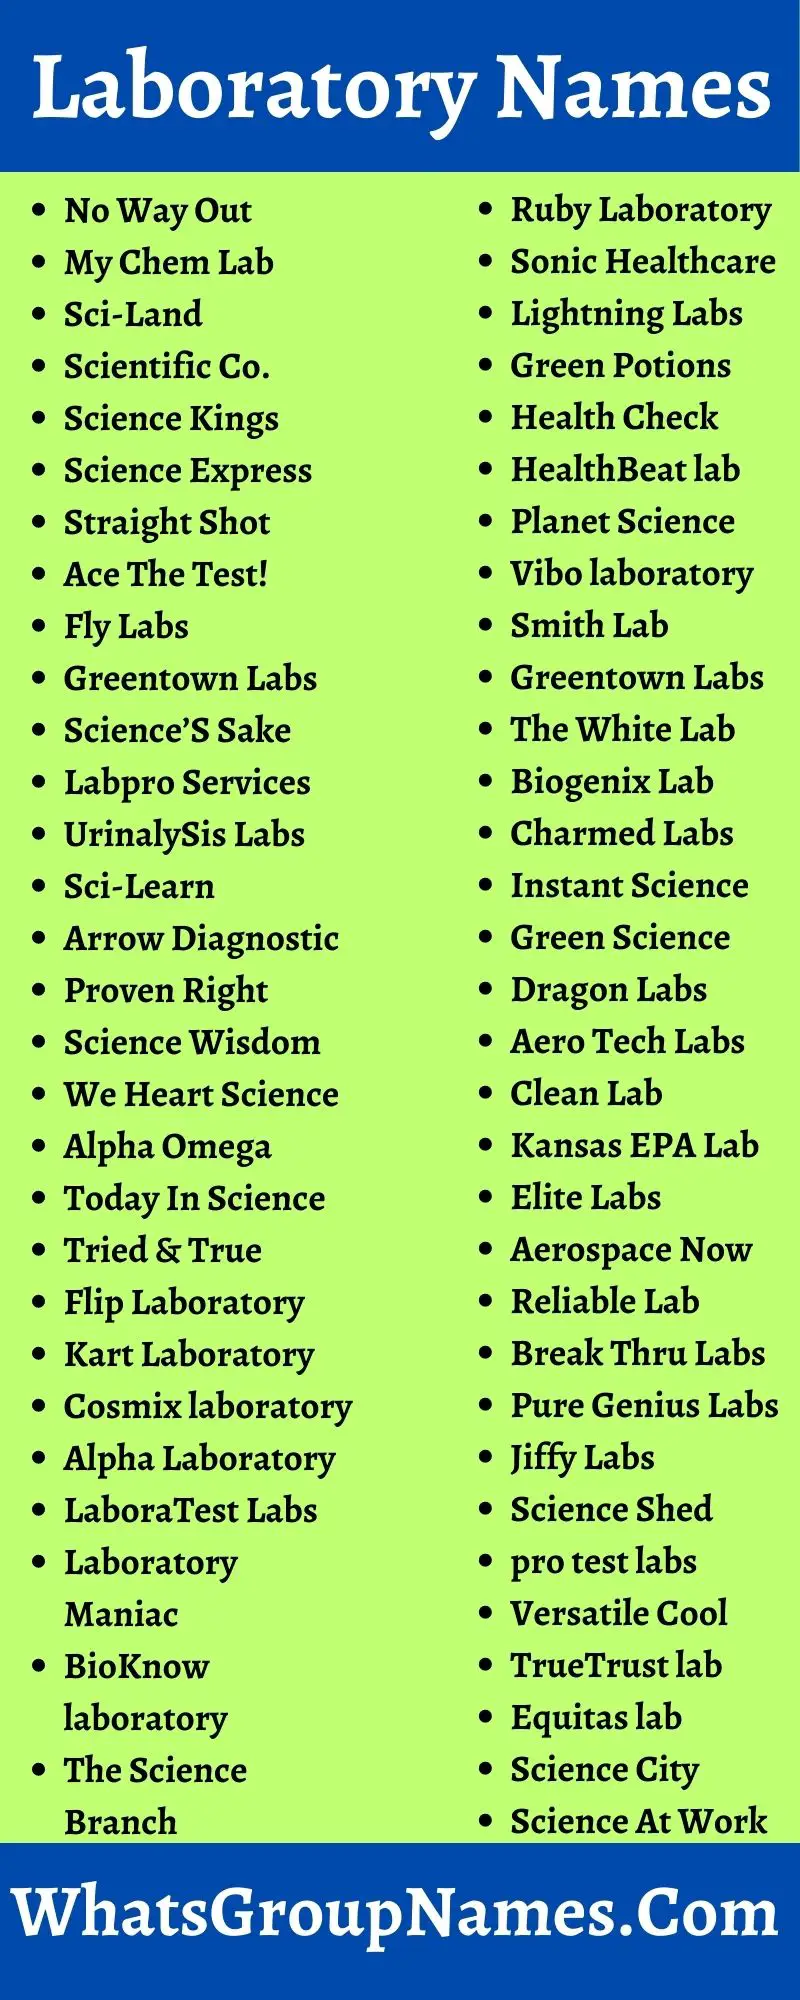 Laboratory Names